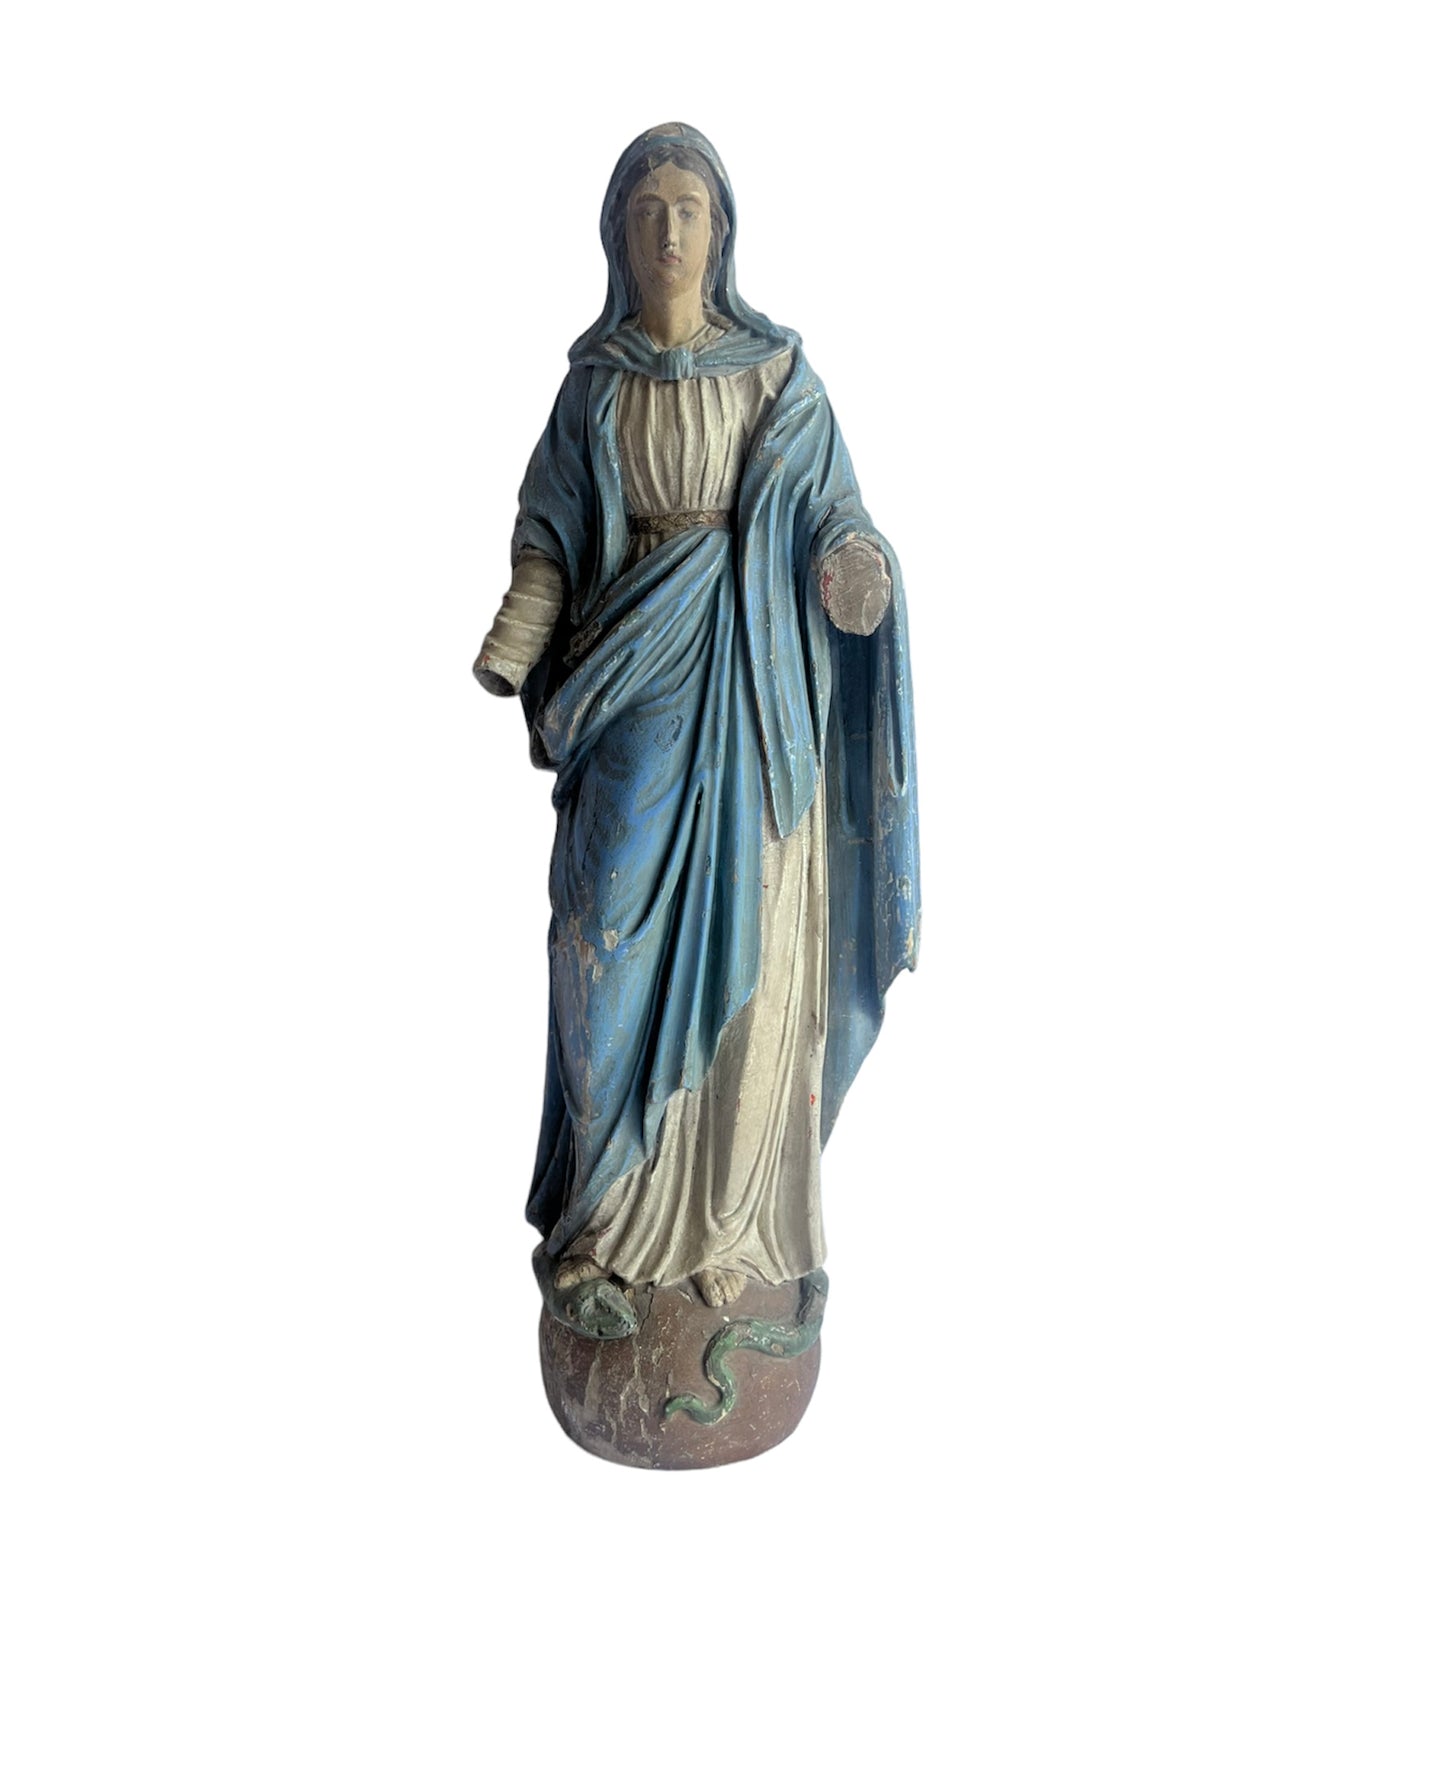 Antique Virgin Mary